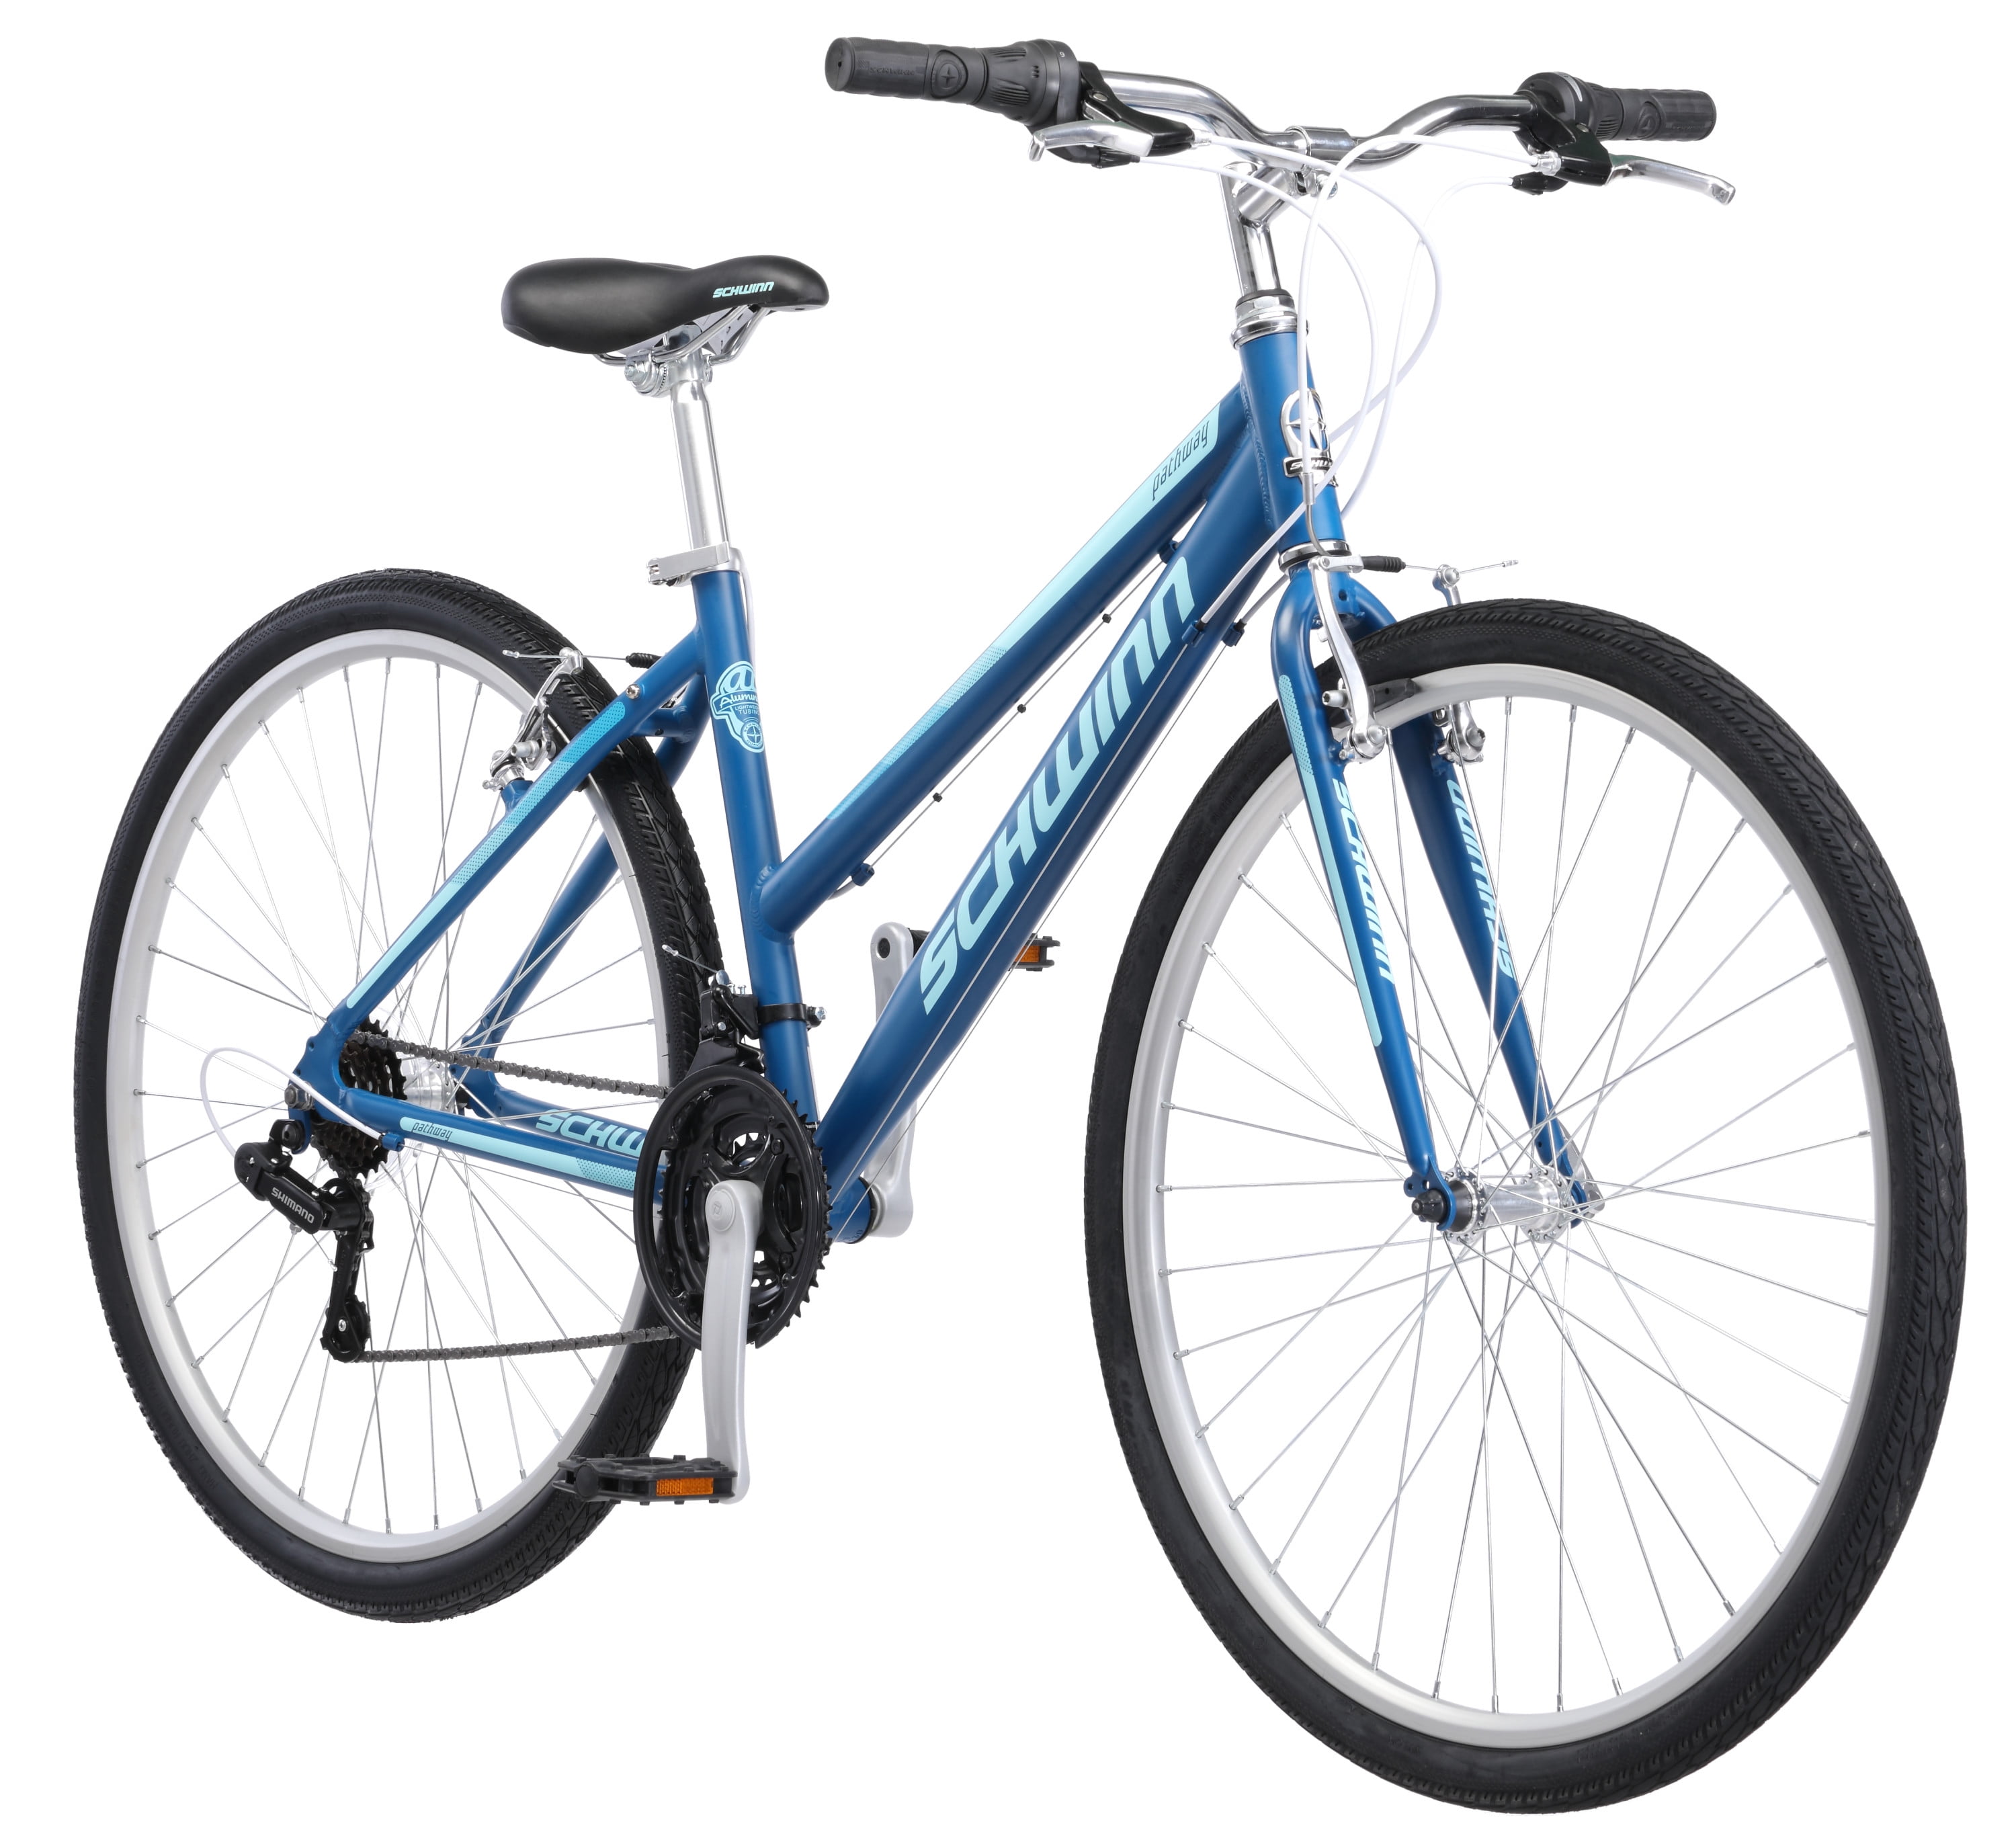 Schwinn Pathway Multi-Use Bike, wheels, 18 speeds, womens frame, blue, 28 wheel hybrid - Walmart.com